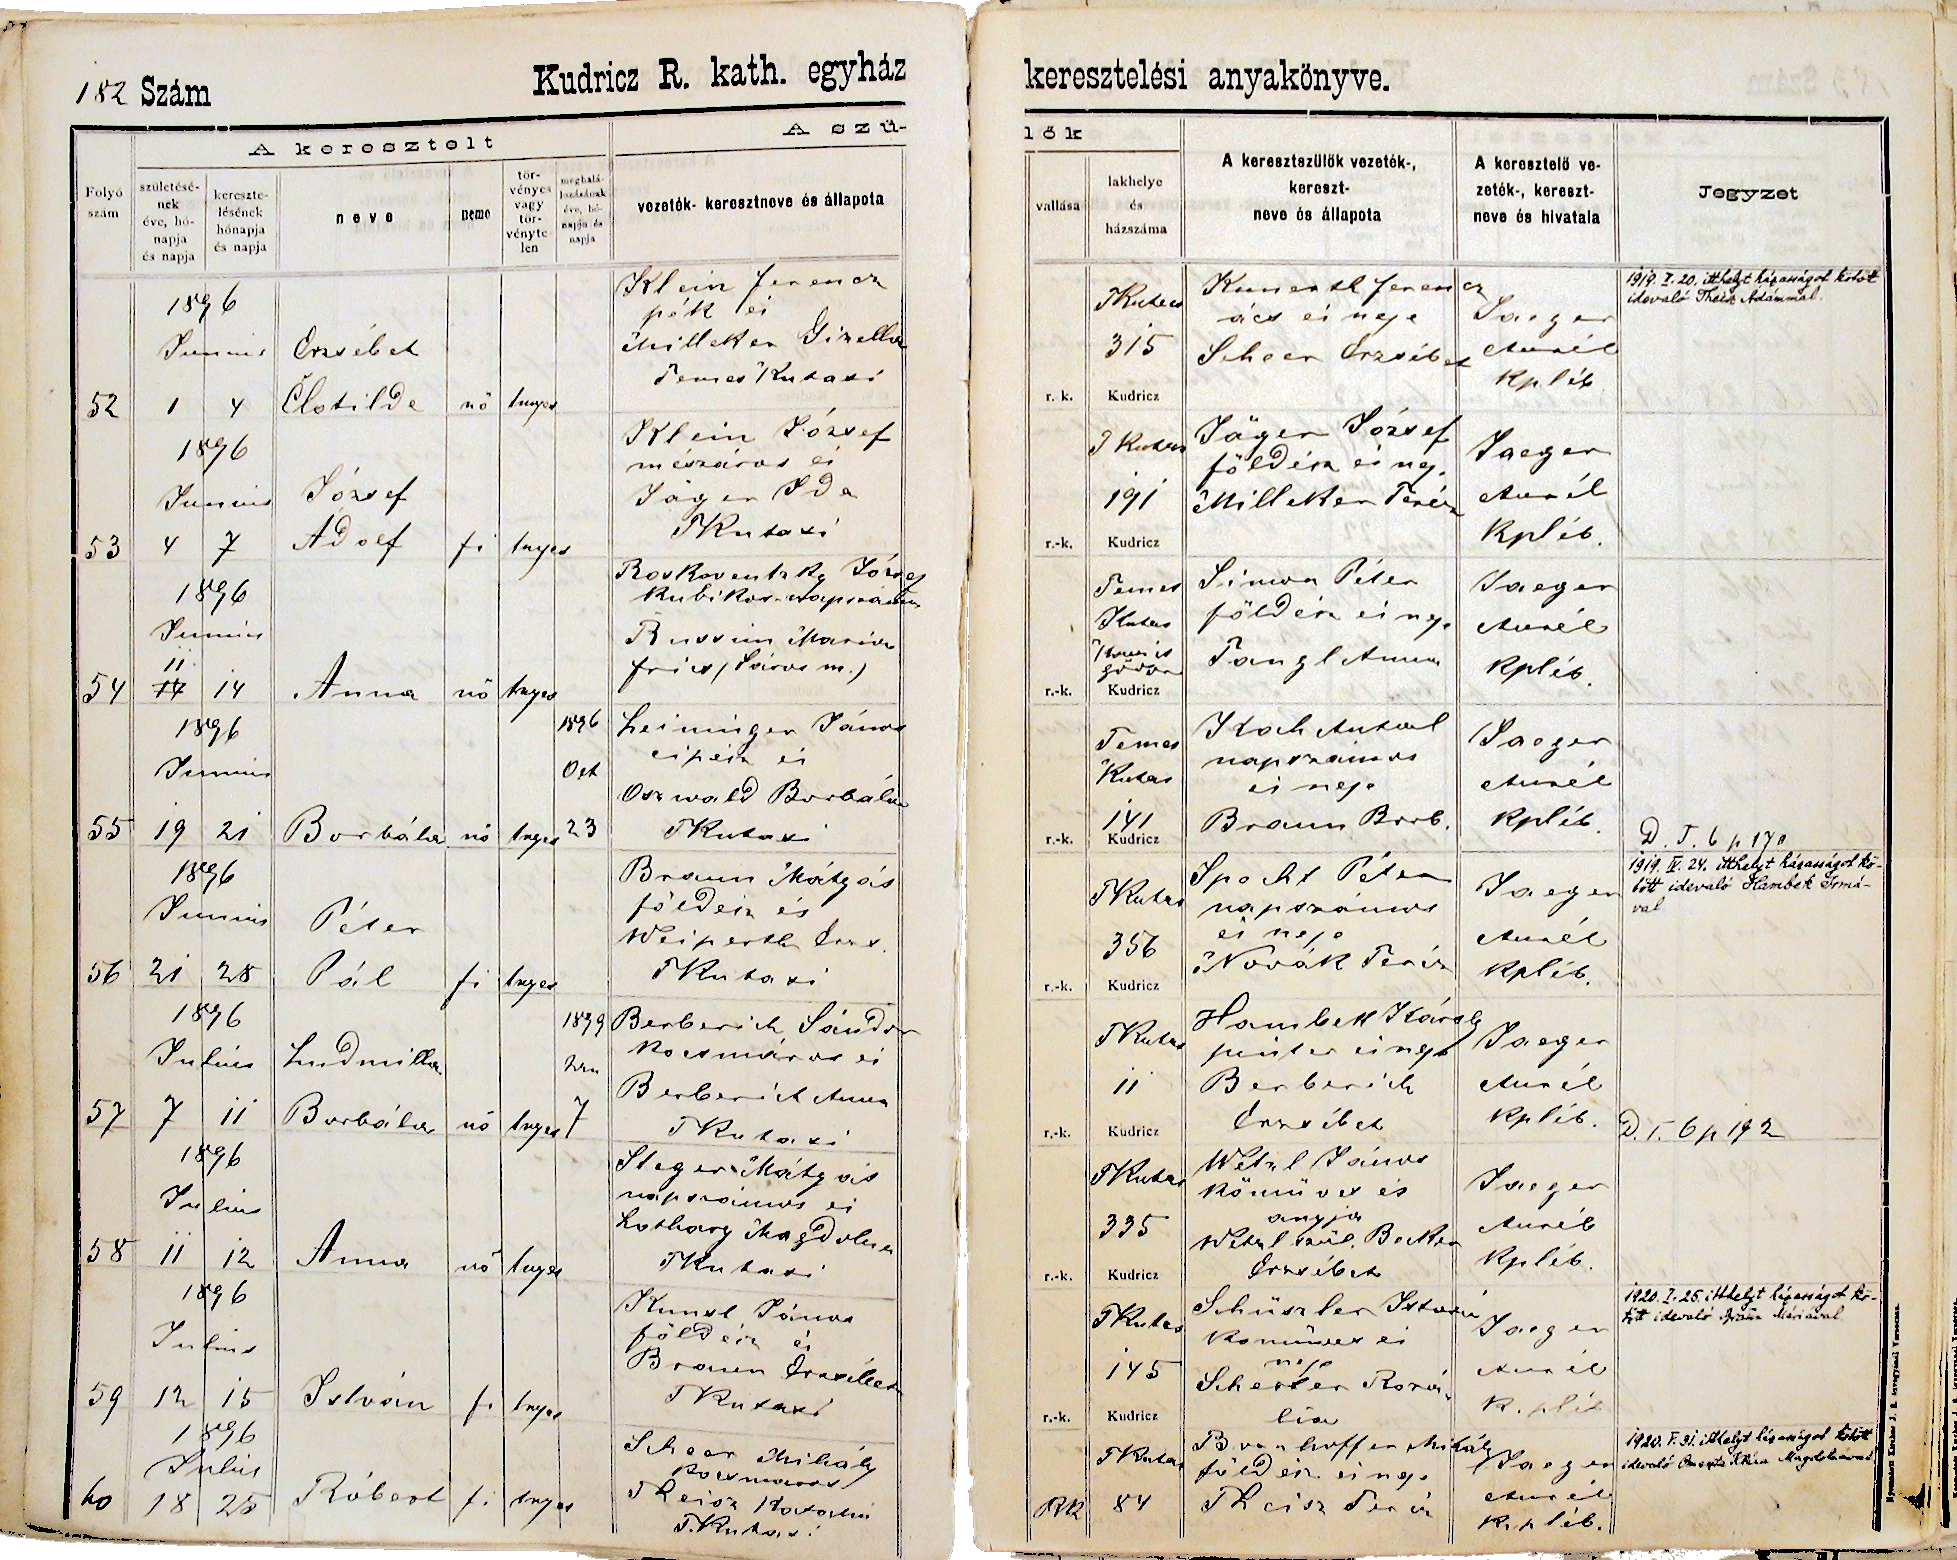 images/church_records/BIRTHS/1884-1899B/1896/182